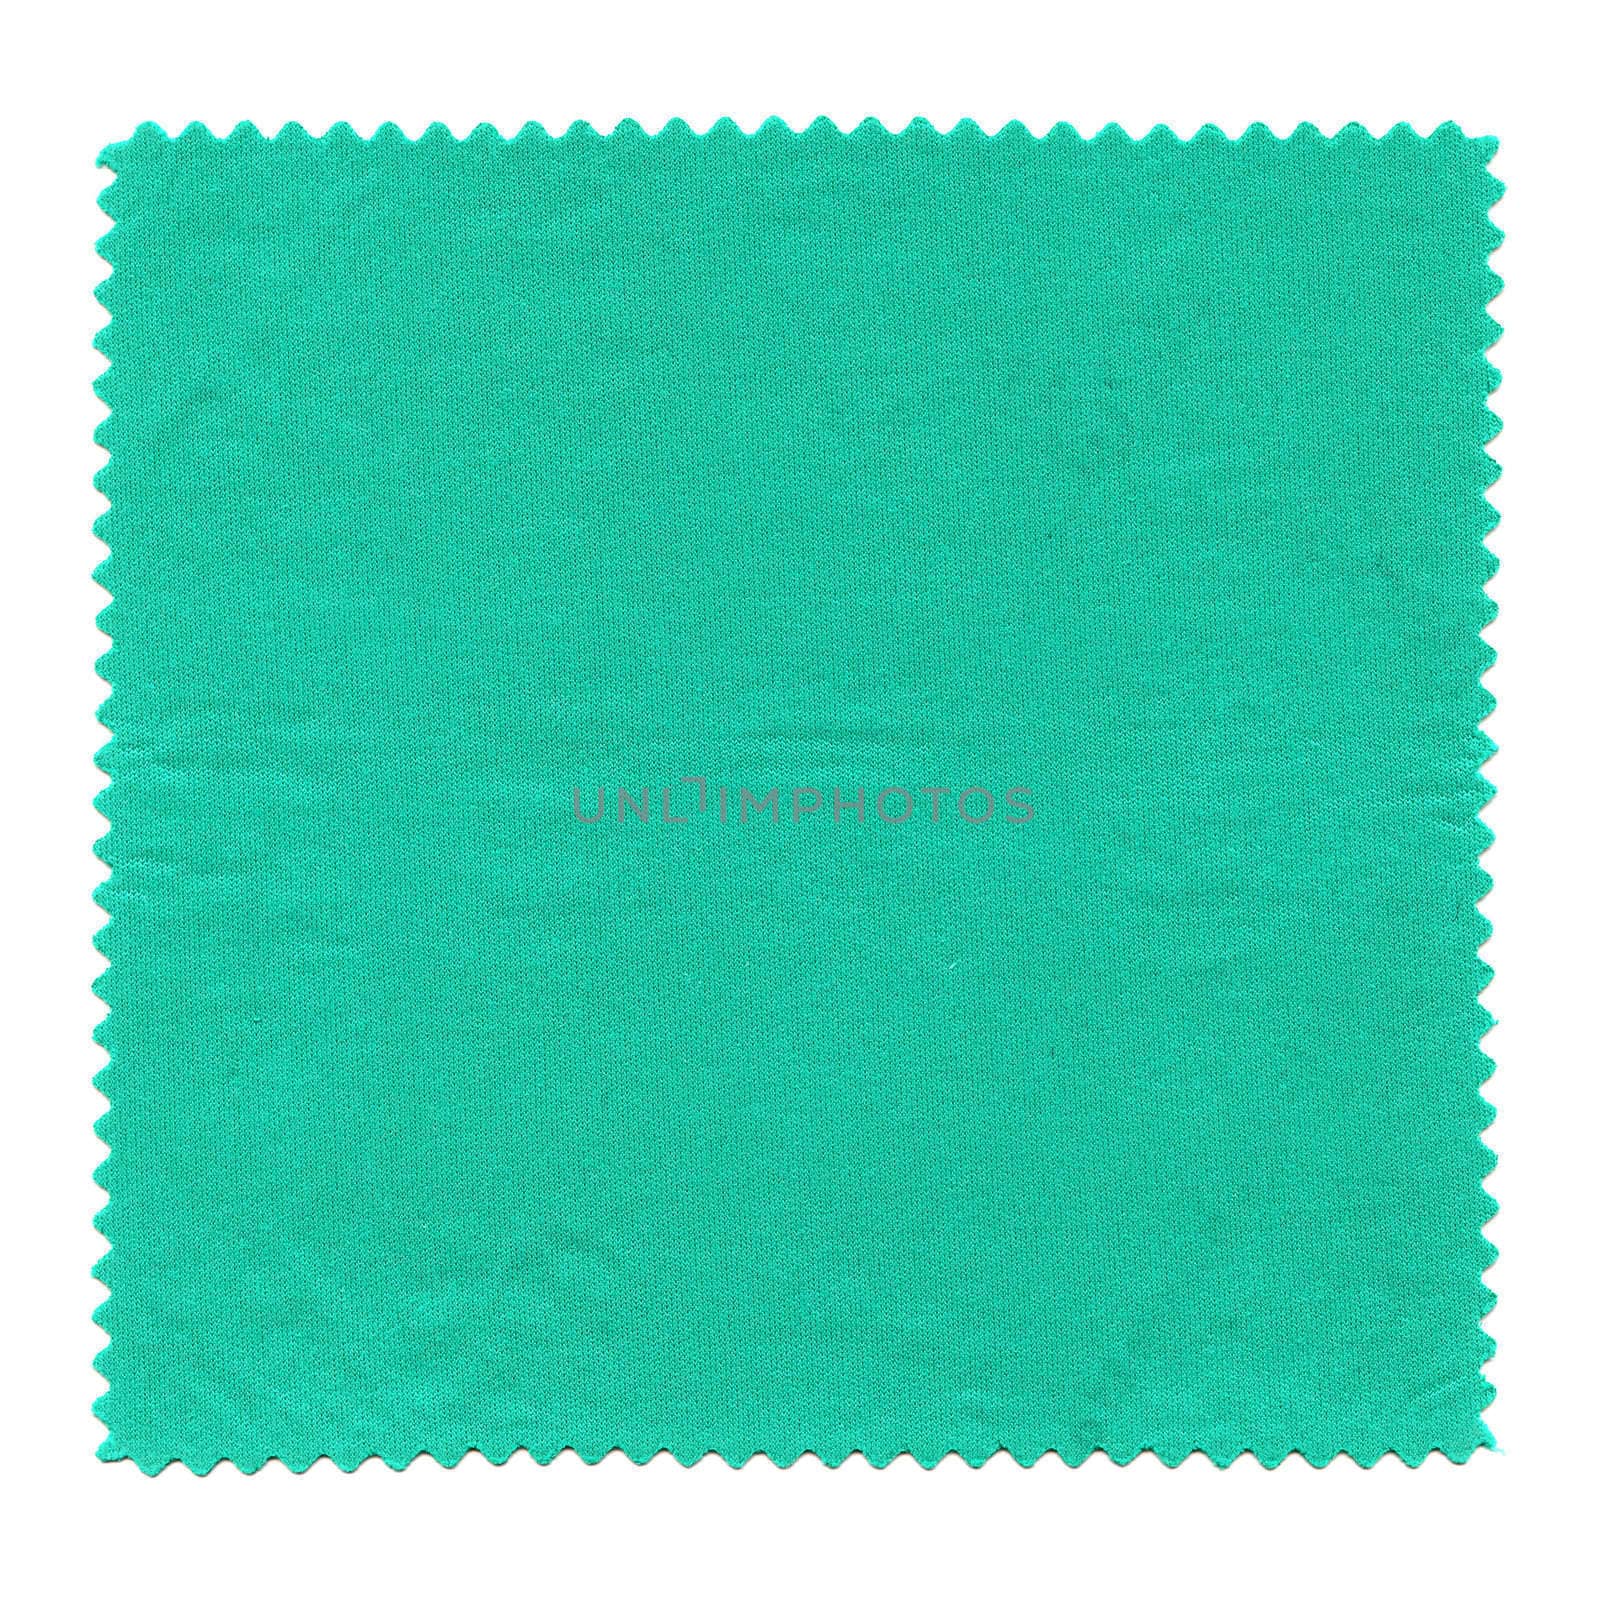 Fabric sample by silviacrisman